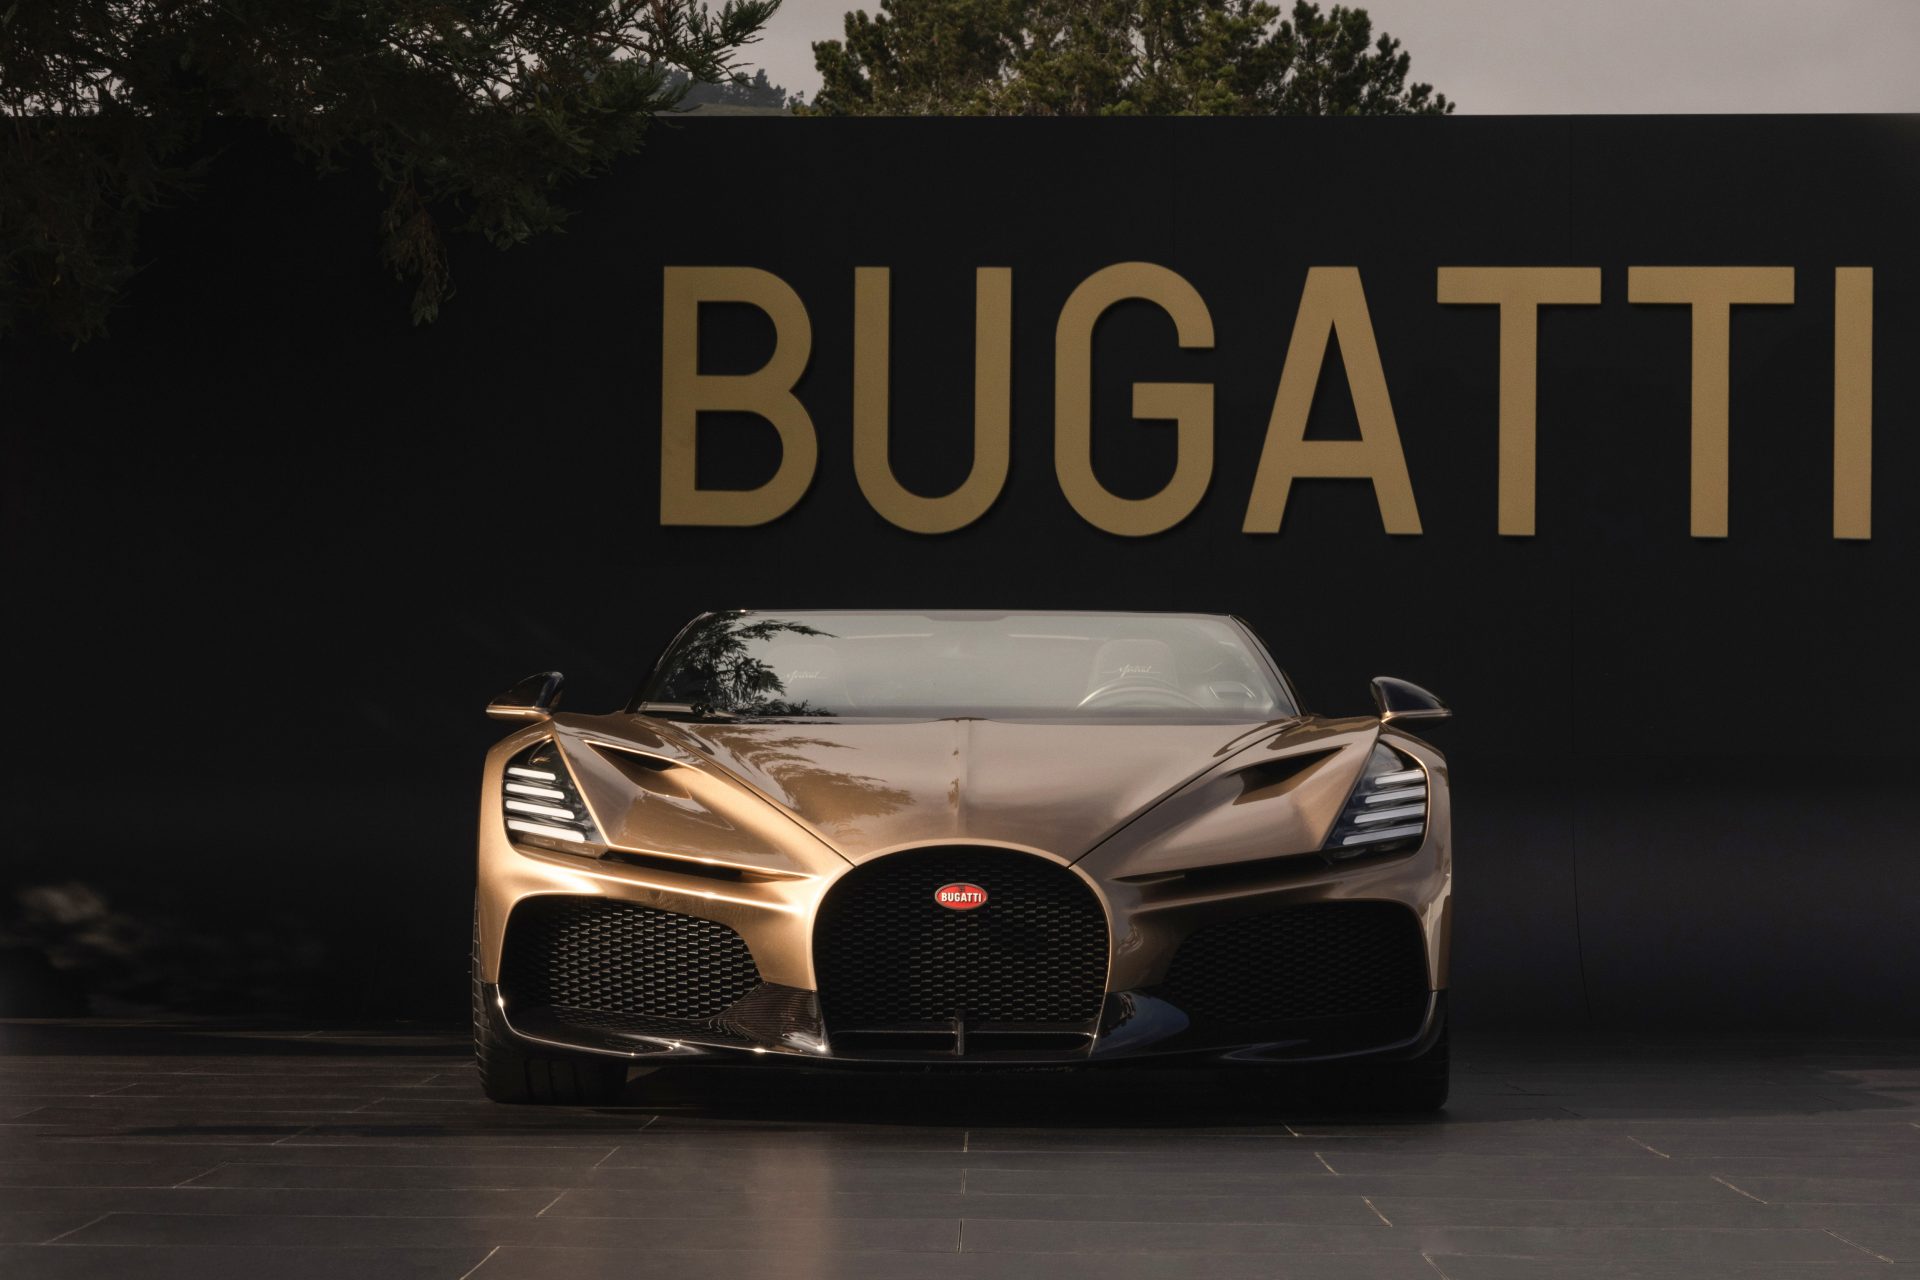 02 BUGATTI The Quail 2023 Η Bugatti προβάλλει την δεξιοτεχνία της αυτοκίνησης στο The Quail